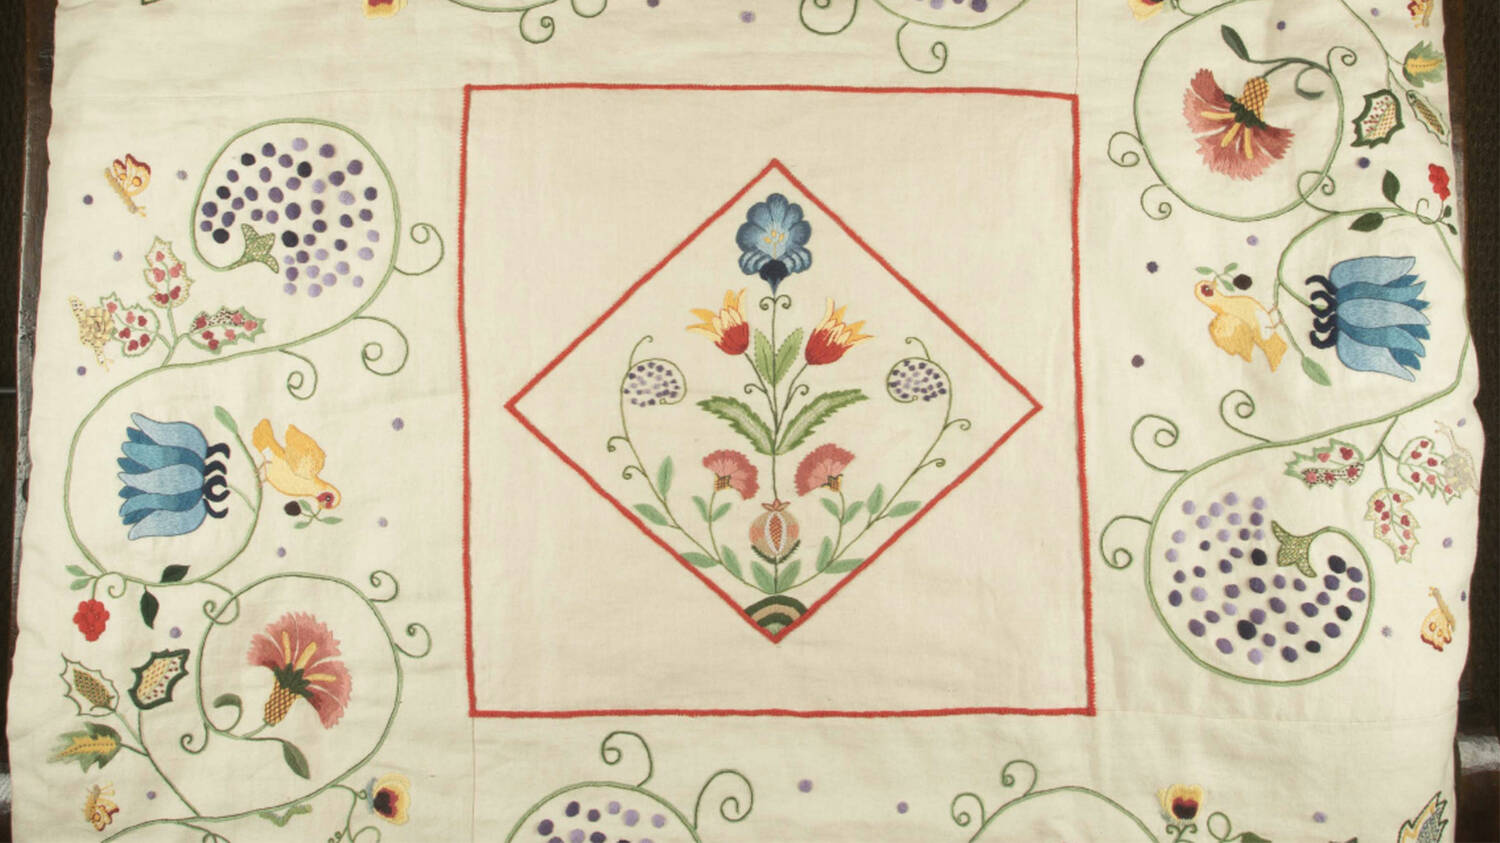 Tapestry at Culross Palace